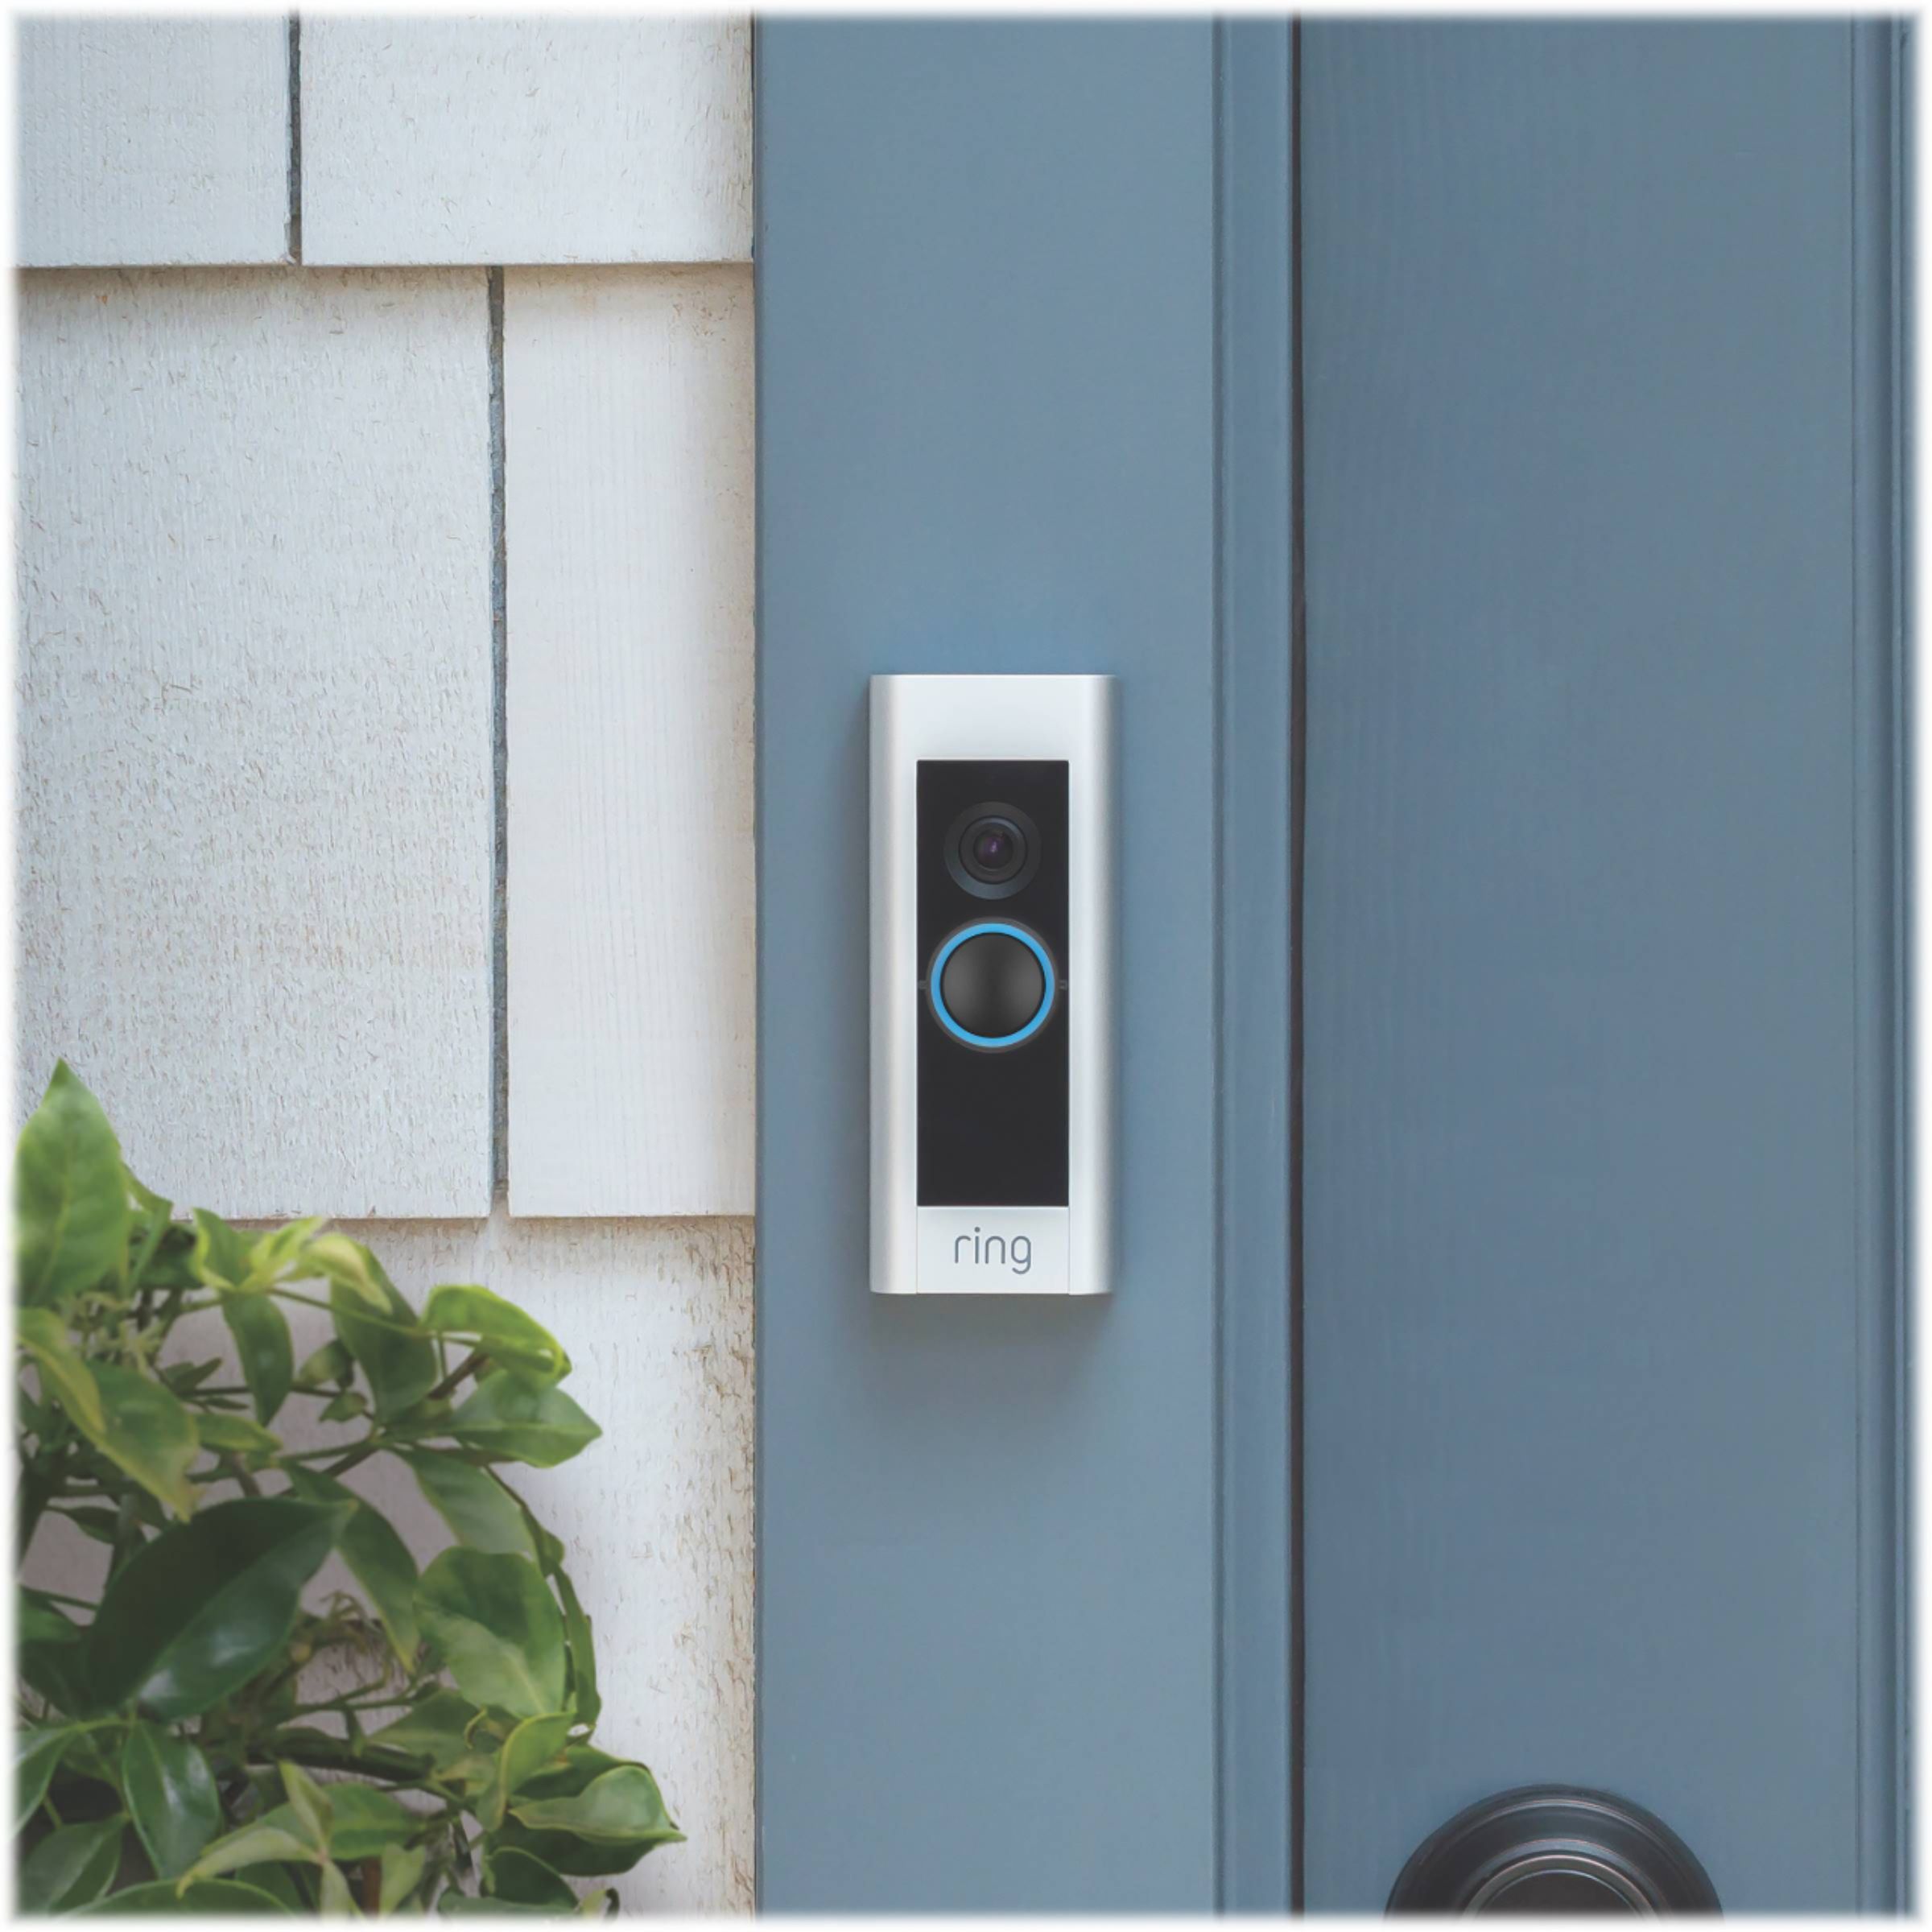 Ring Video Doorbell Pro 8VR1P6-0EN0 